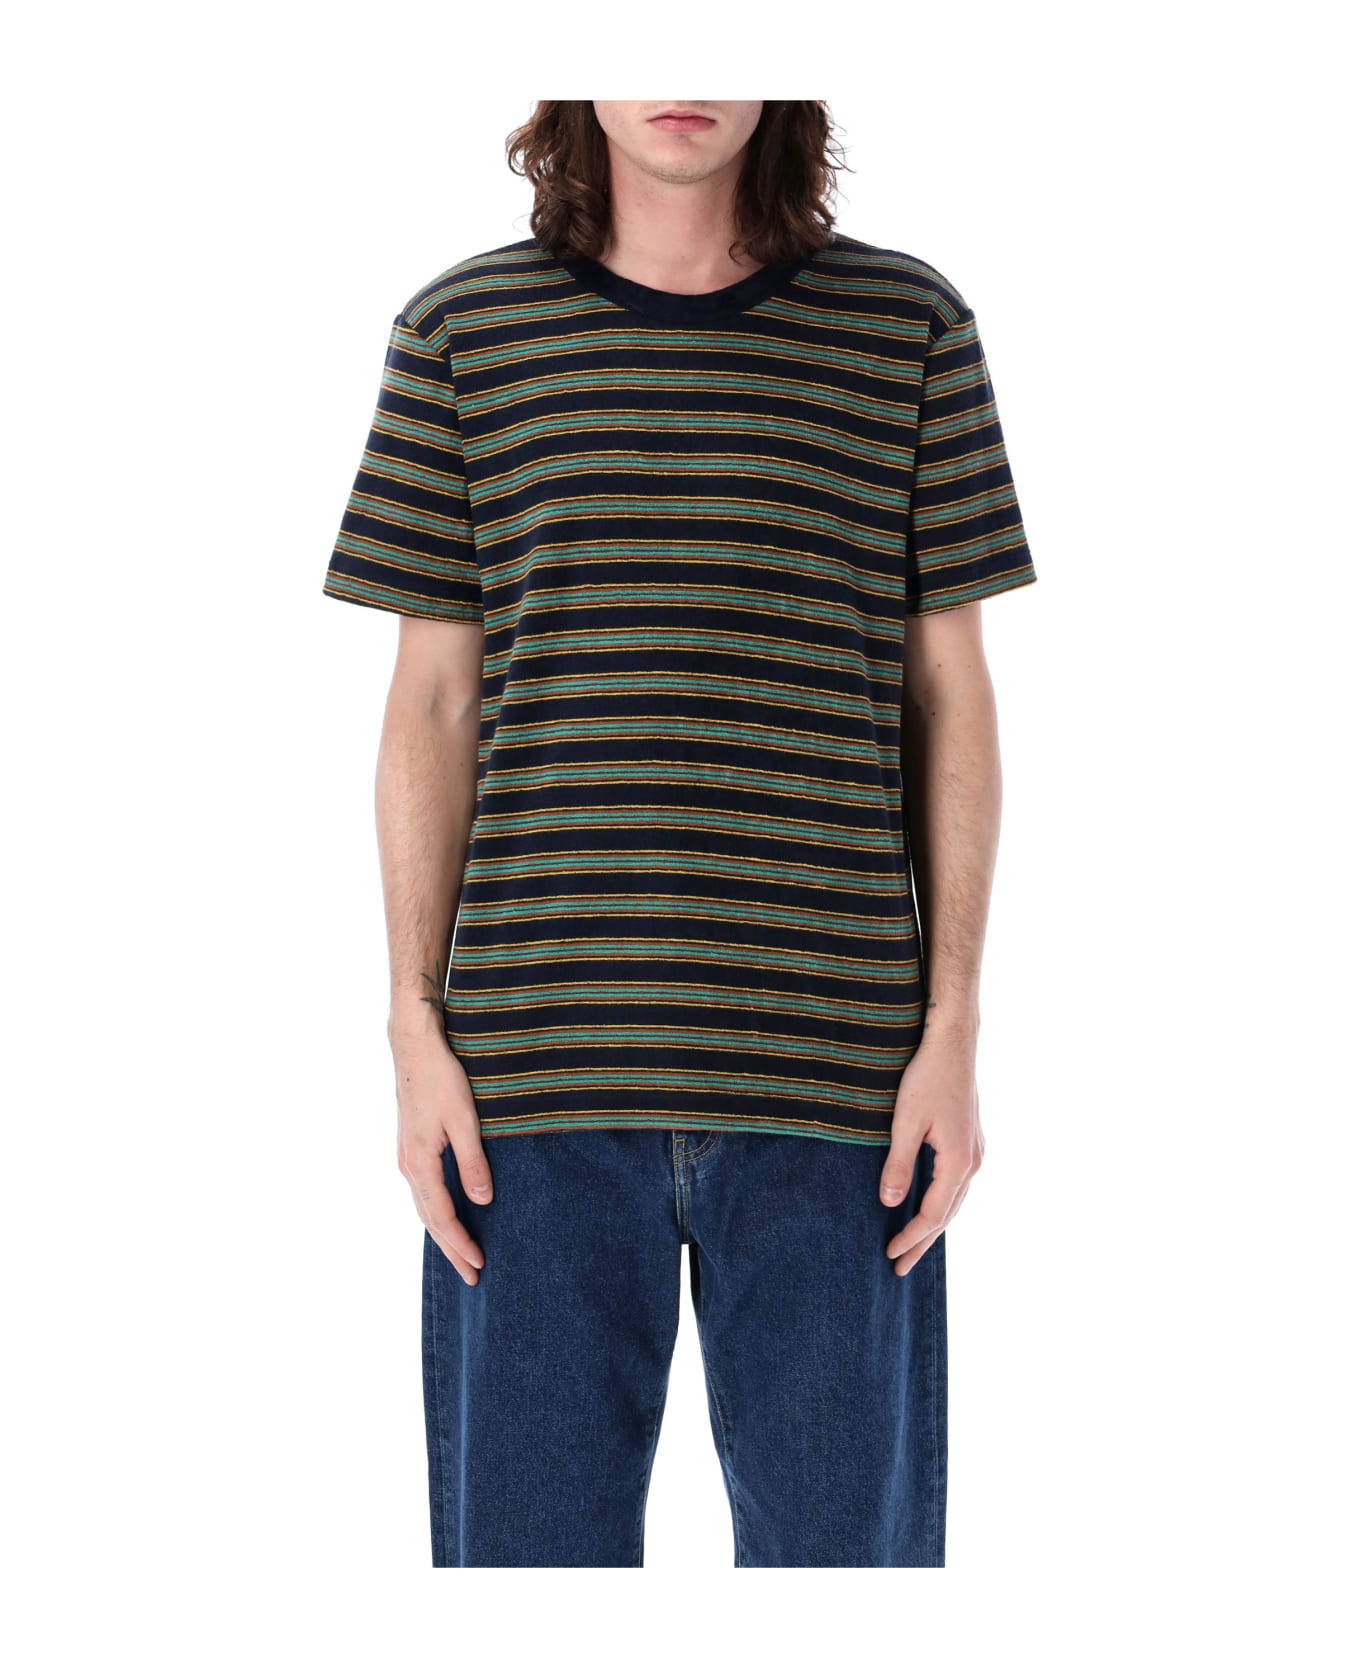 Howlin Striped T-shirt - MAGIC NAVY